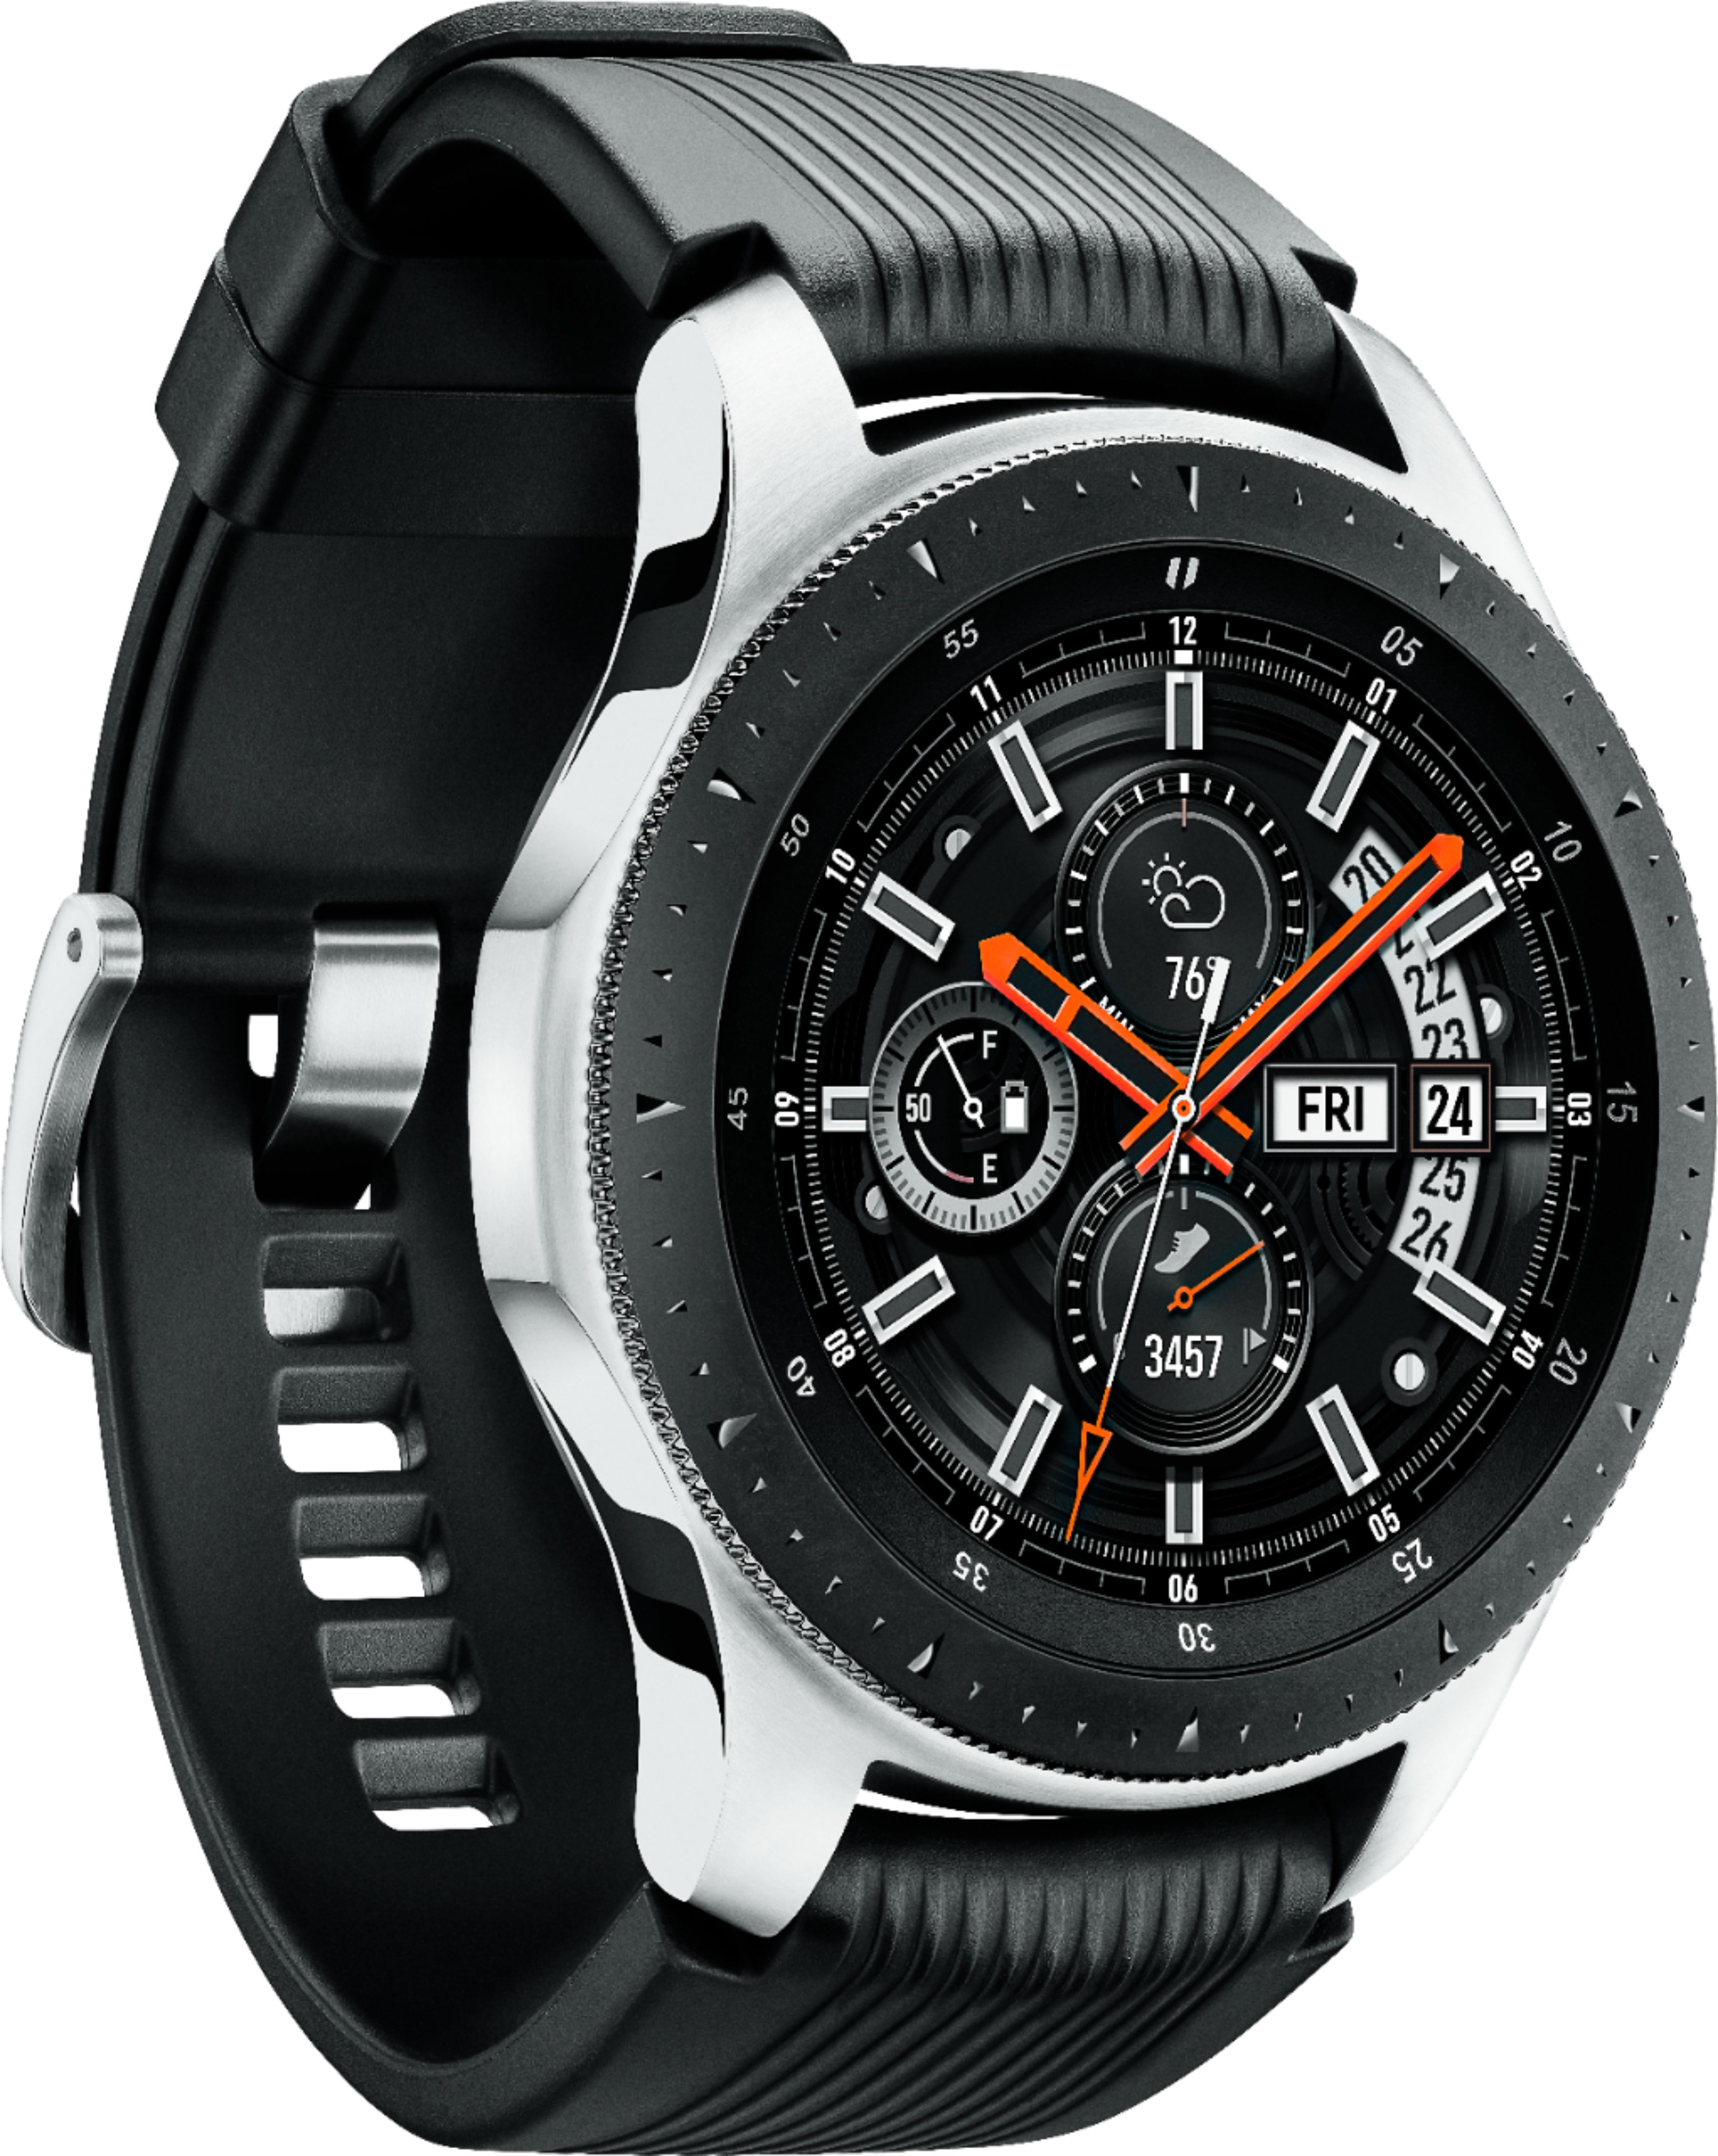 Samsung Galaxy Watch Smartwatch 46mm 